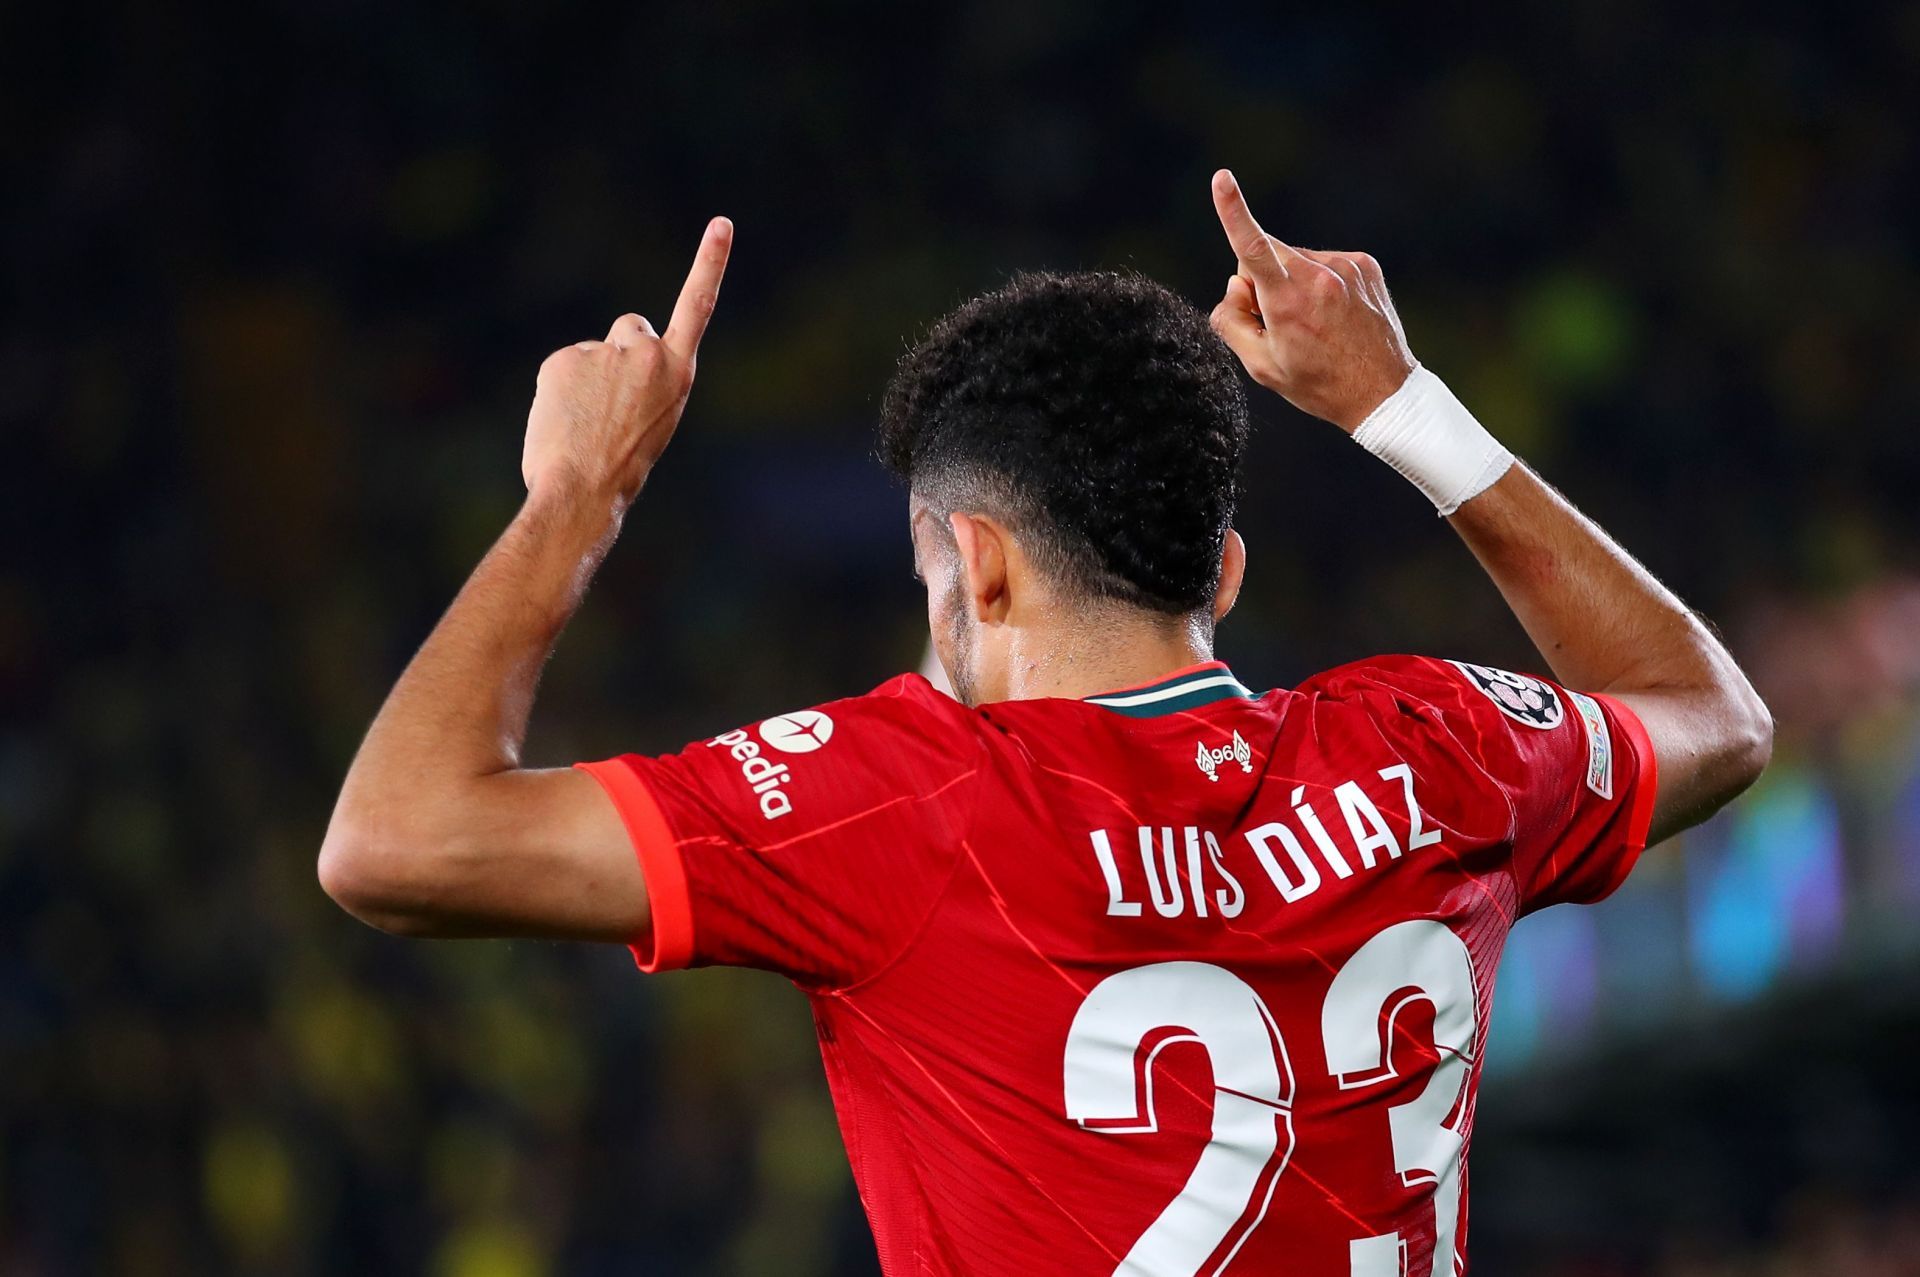 Luis Diaz celebrates after scoring a goal.